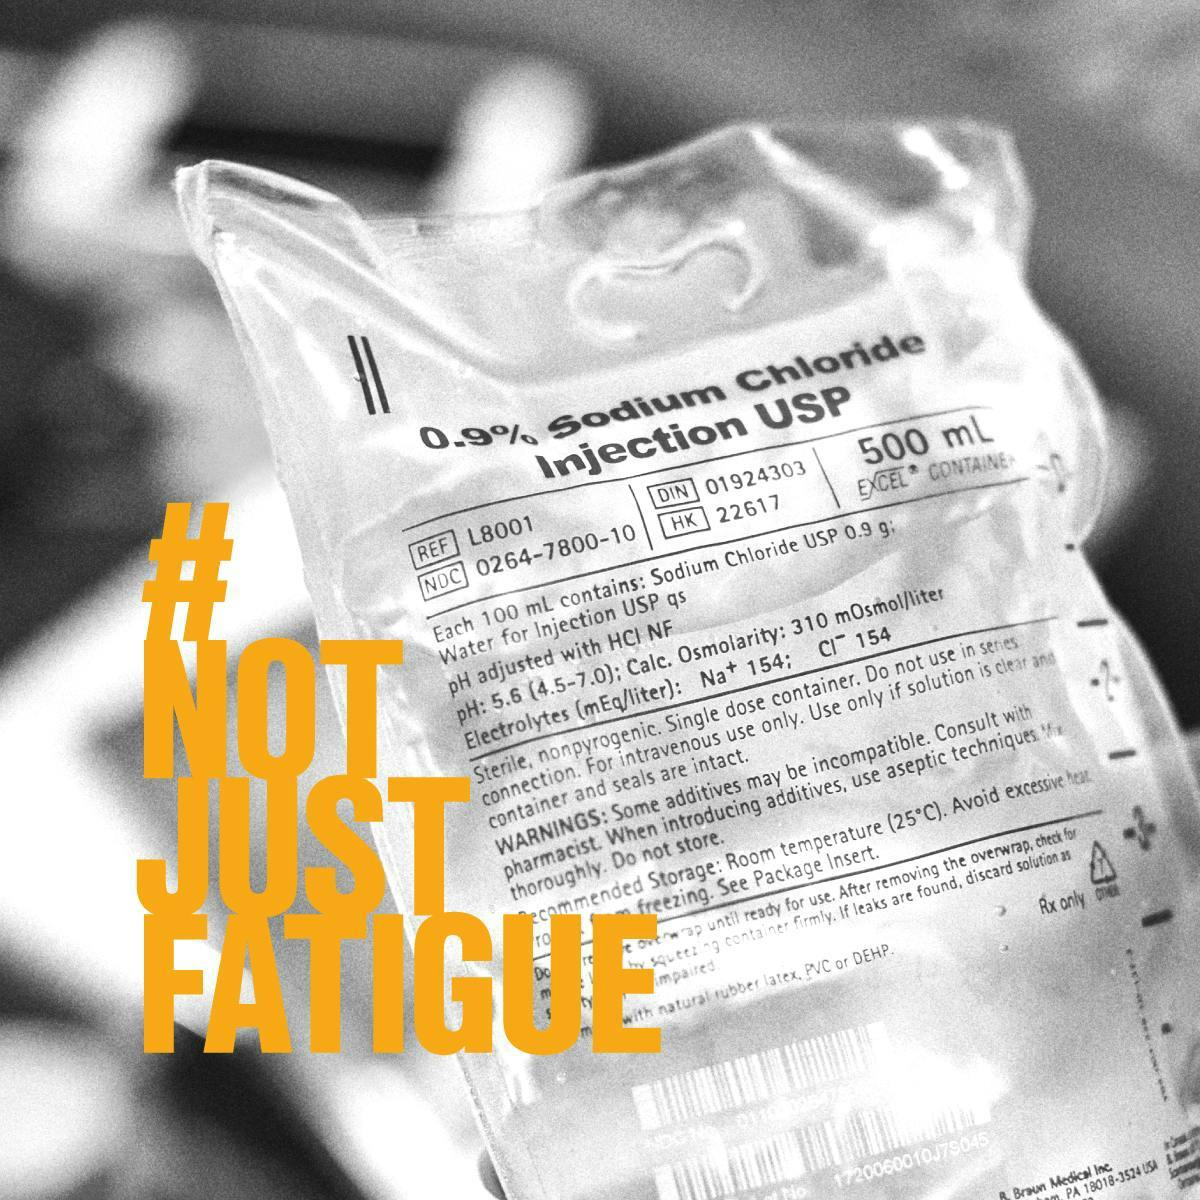 Photo of sodium chloride injection USP bag with #NotJustFatigue